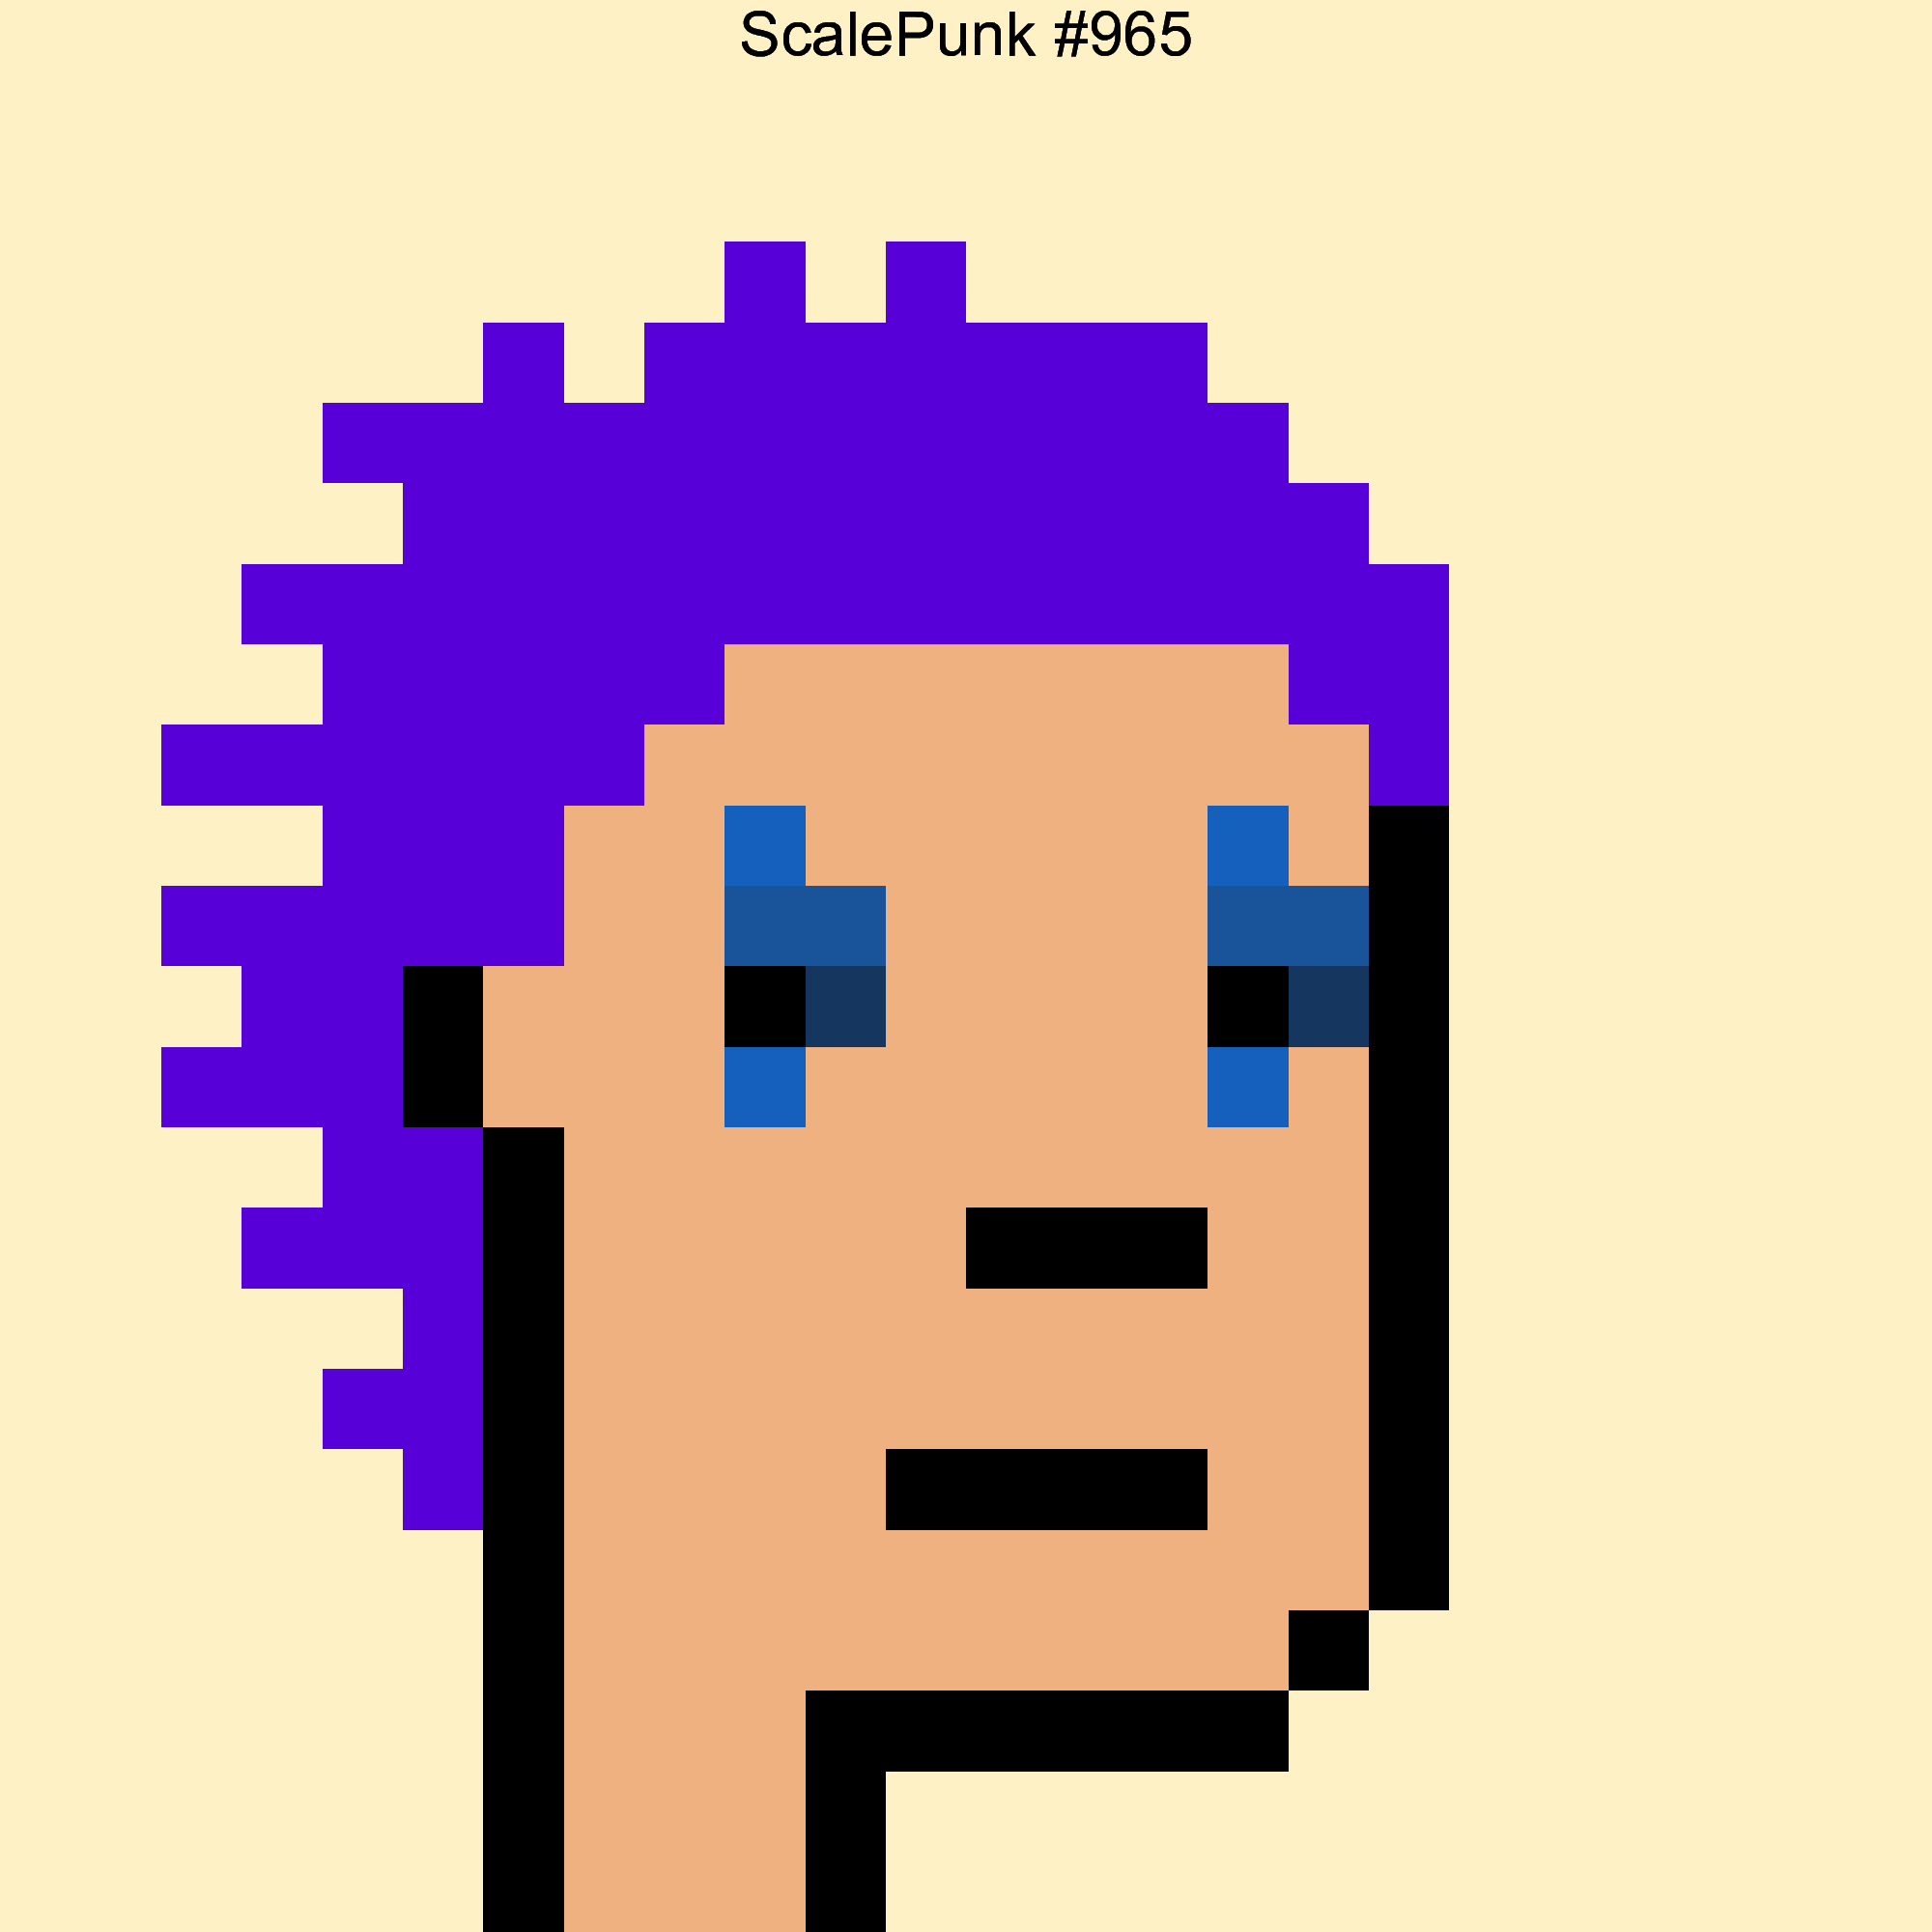 Punk 965